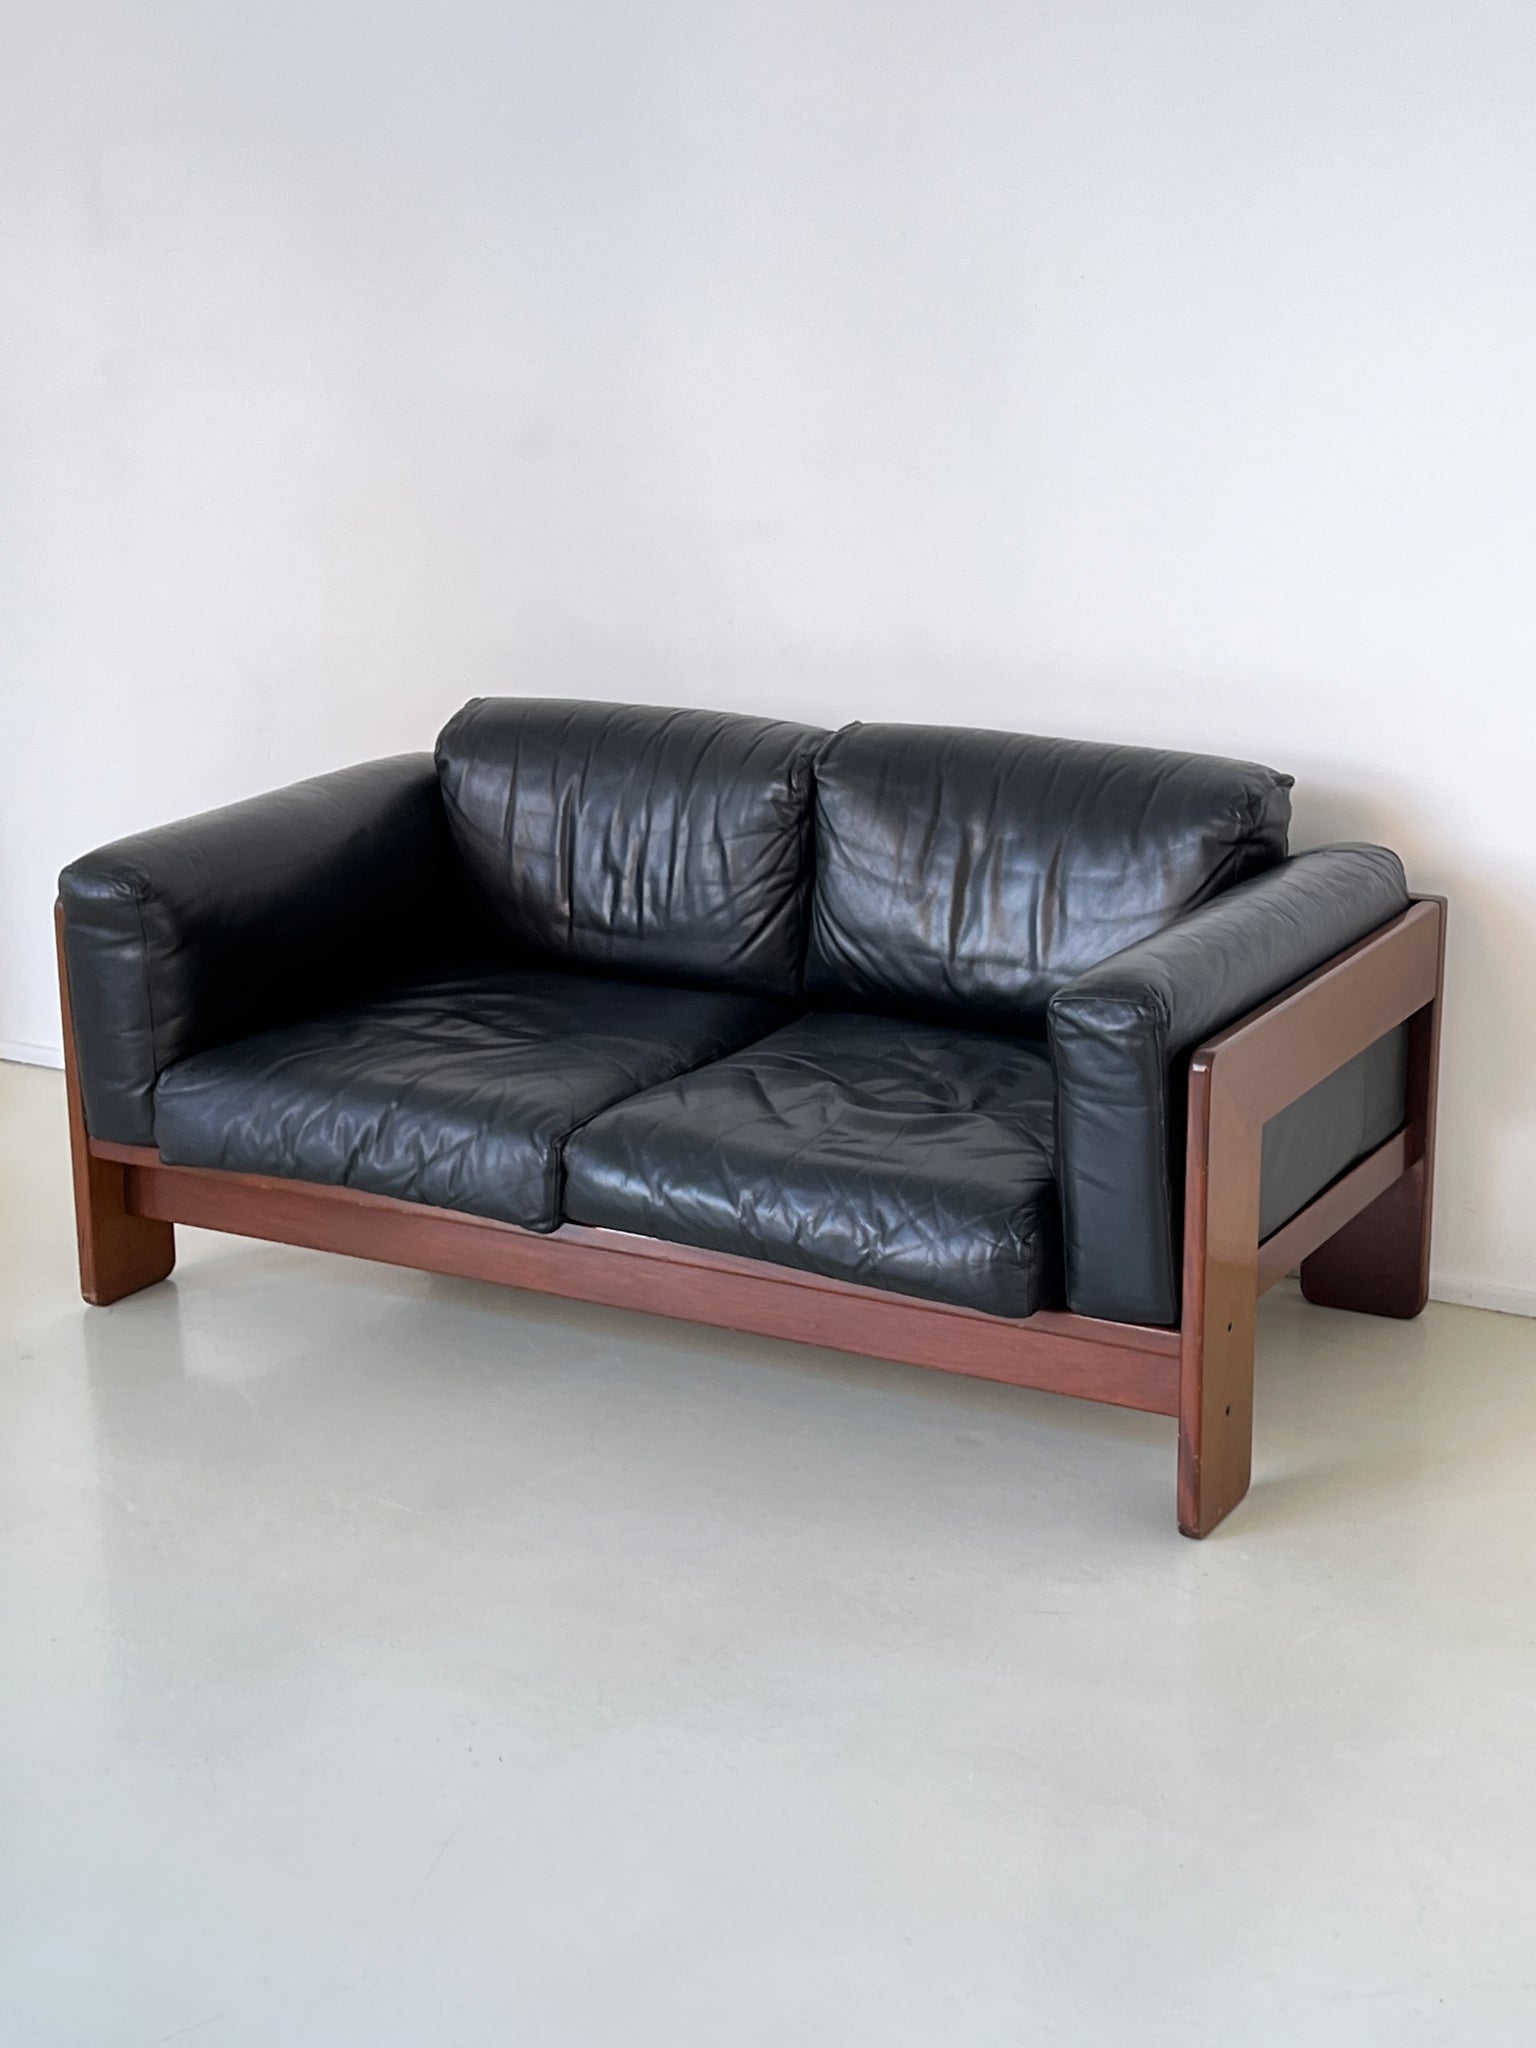 1980s Walnut and Black Leather Bastiano Sofa by Tobia Scarpa